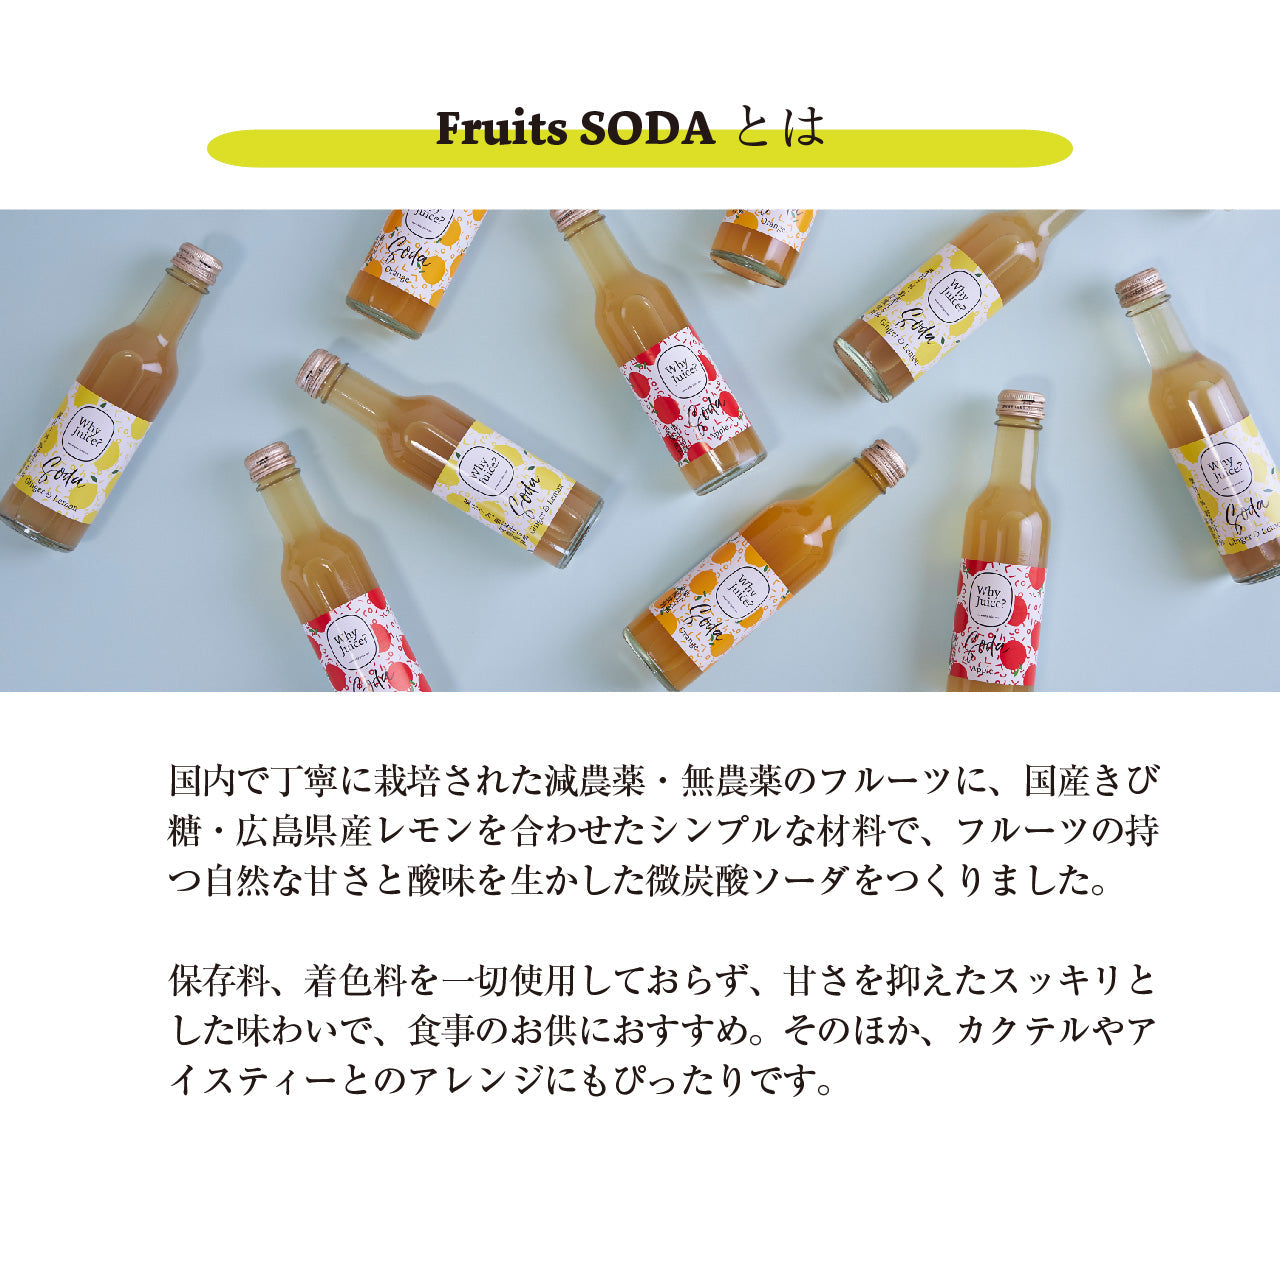 Fruits SODA ギフトボックス-信州りんご-（6本セット）【減農薬・無農薬の果物と野菜】